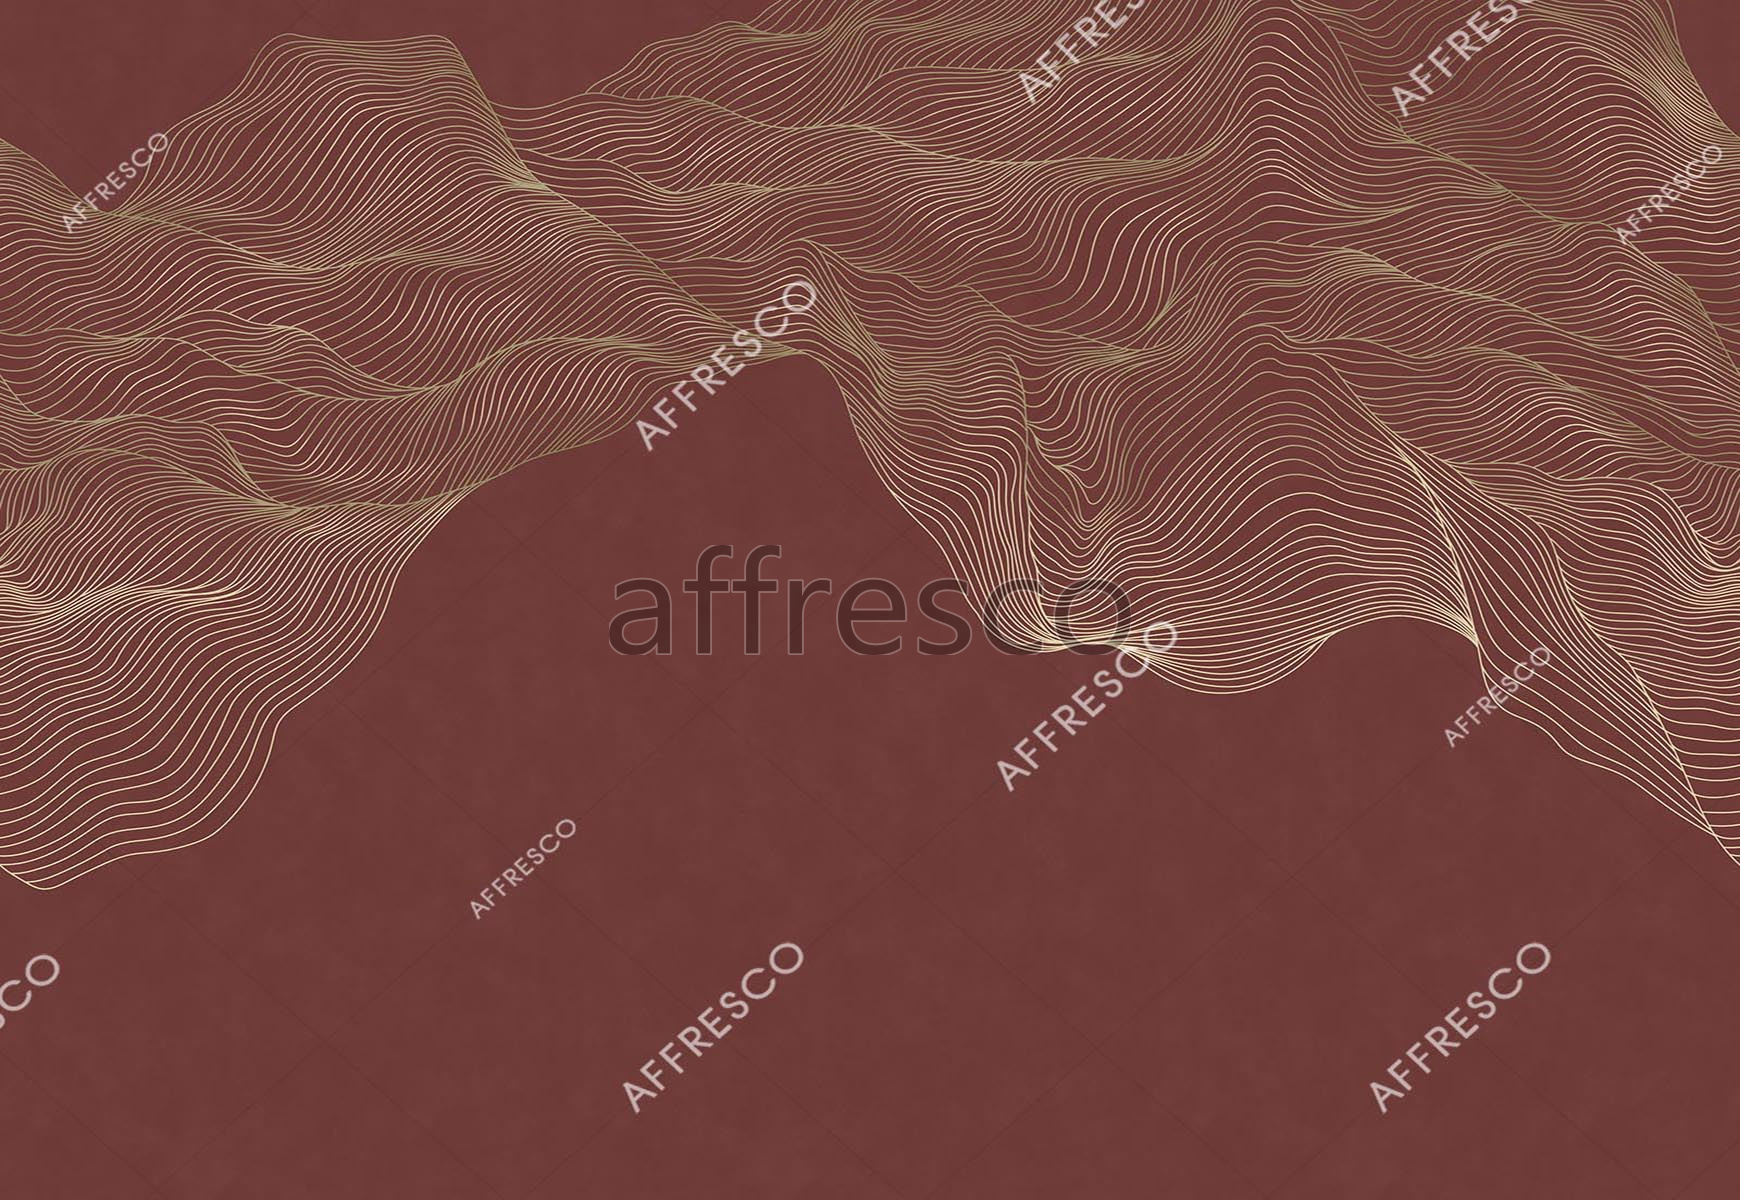 ID139145 | Textures | magical Monterey | Affresco Factory